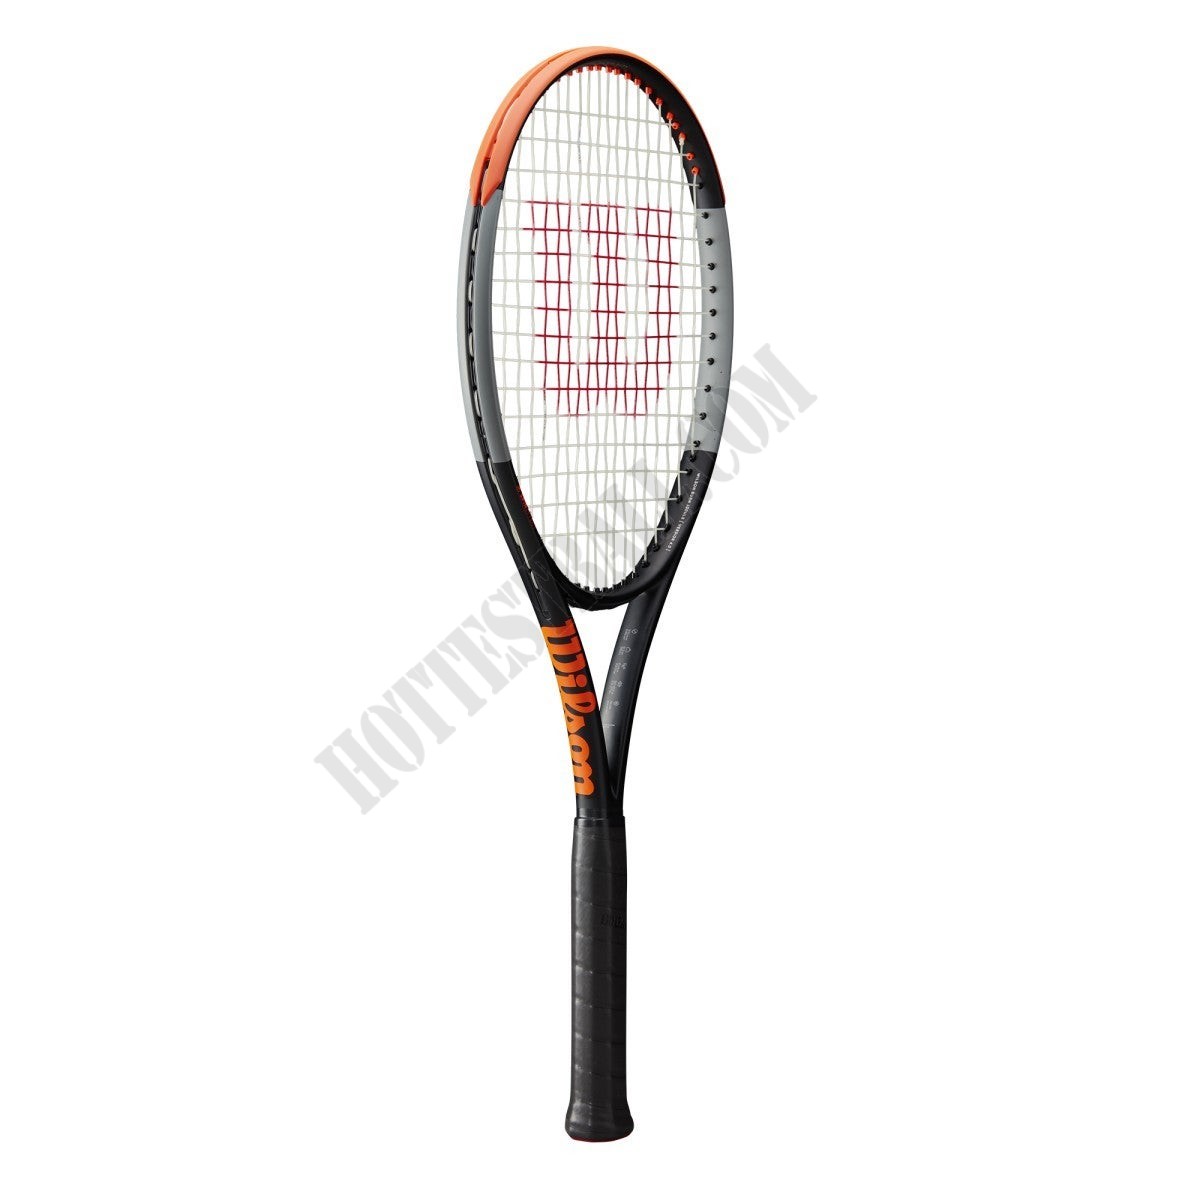 Burn 100ULS v4 Tennis Racket - Wilson Discount Store - -0